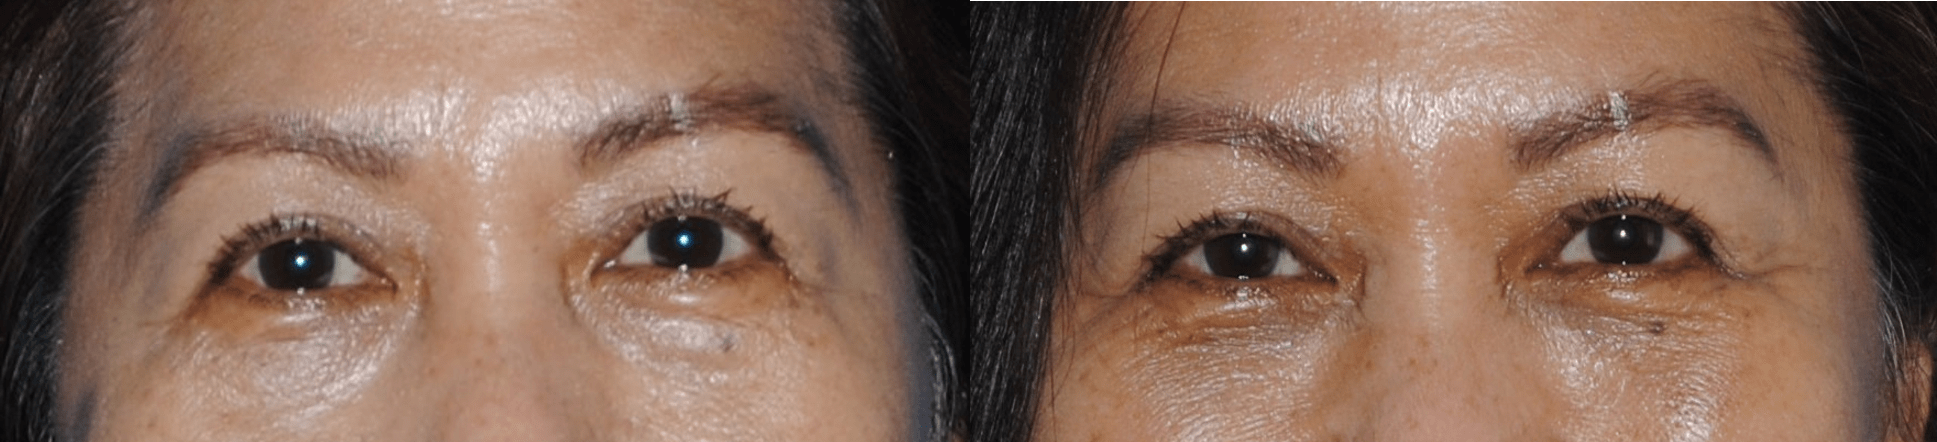 Before and After Lower Blepharoplasty for Facial Rejuvenation